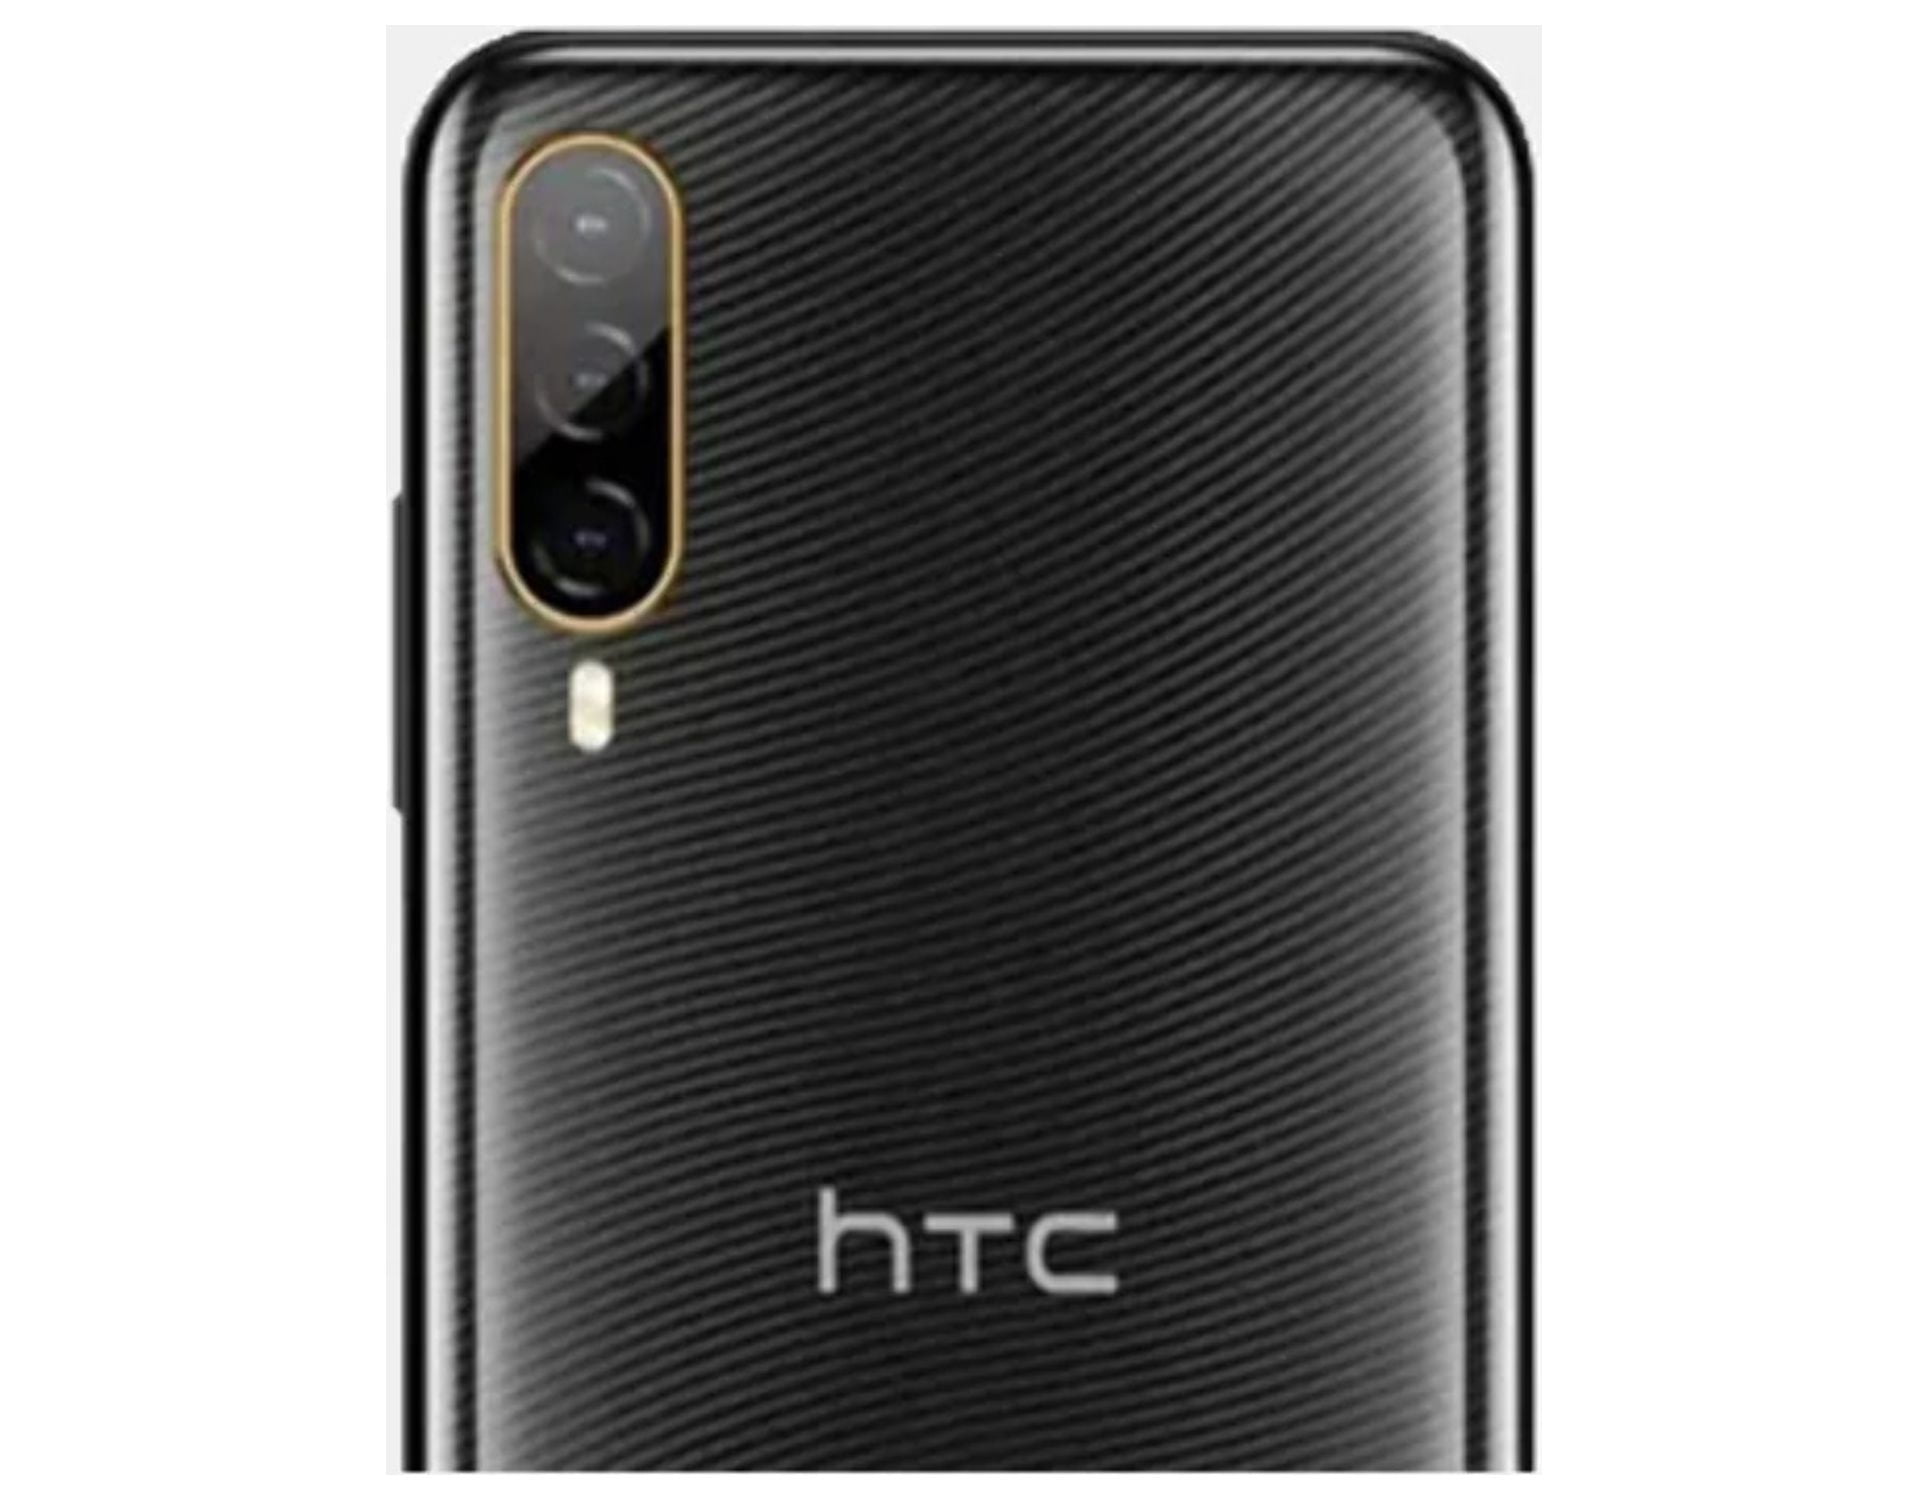 HTC Desire (PB99200) Black (Unlocked) Smartphone Android 2.2 Froyo Mobile  phone